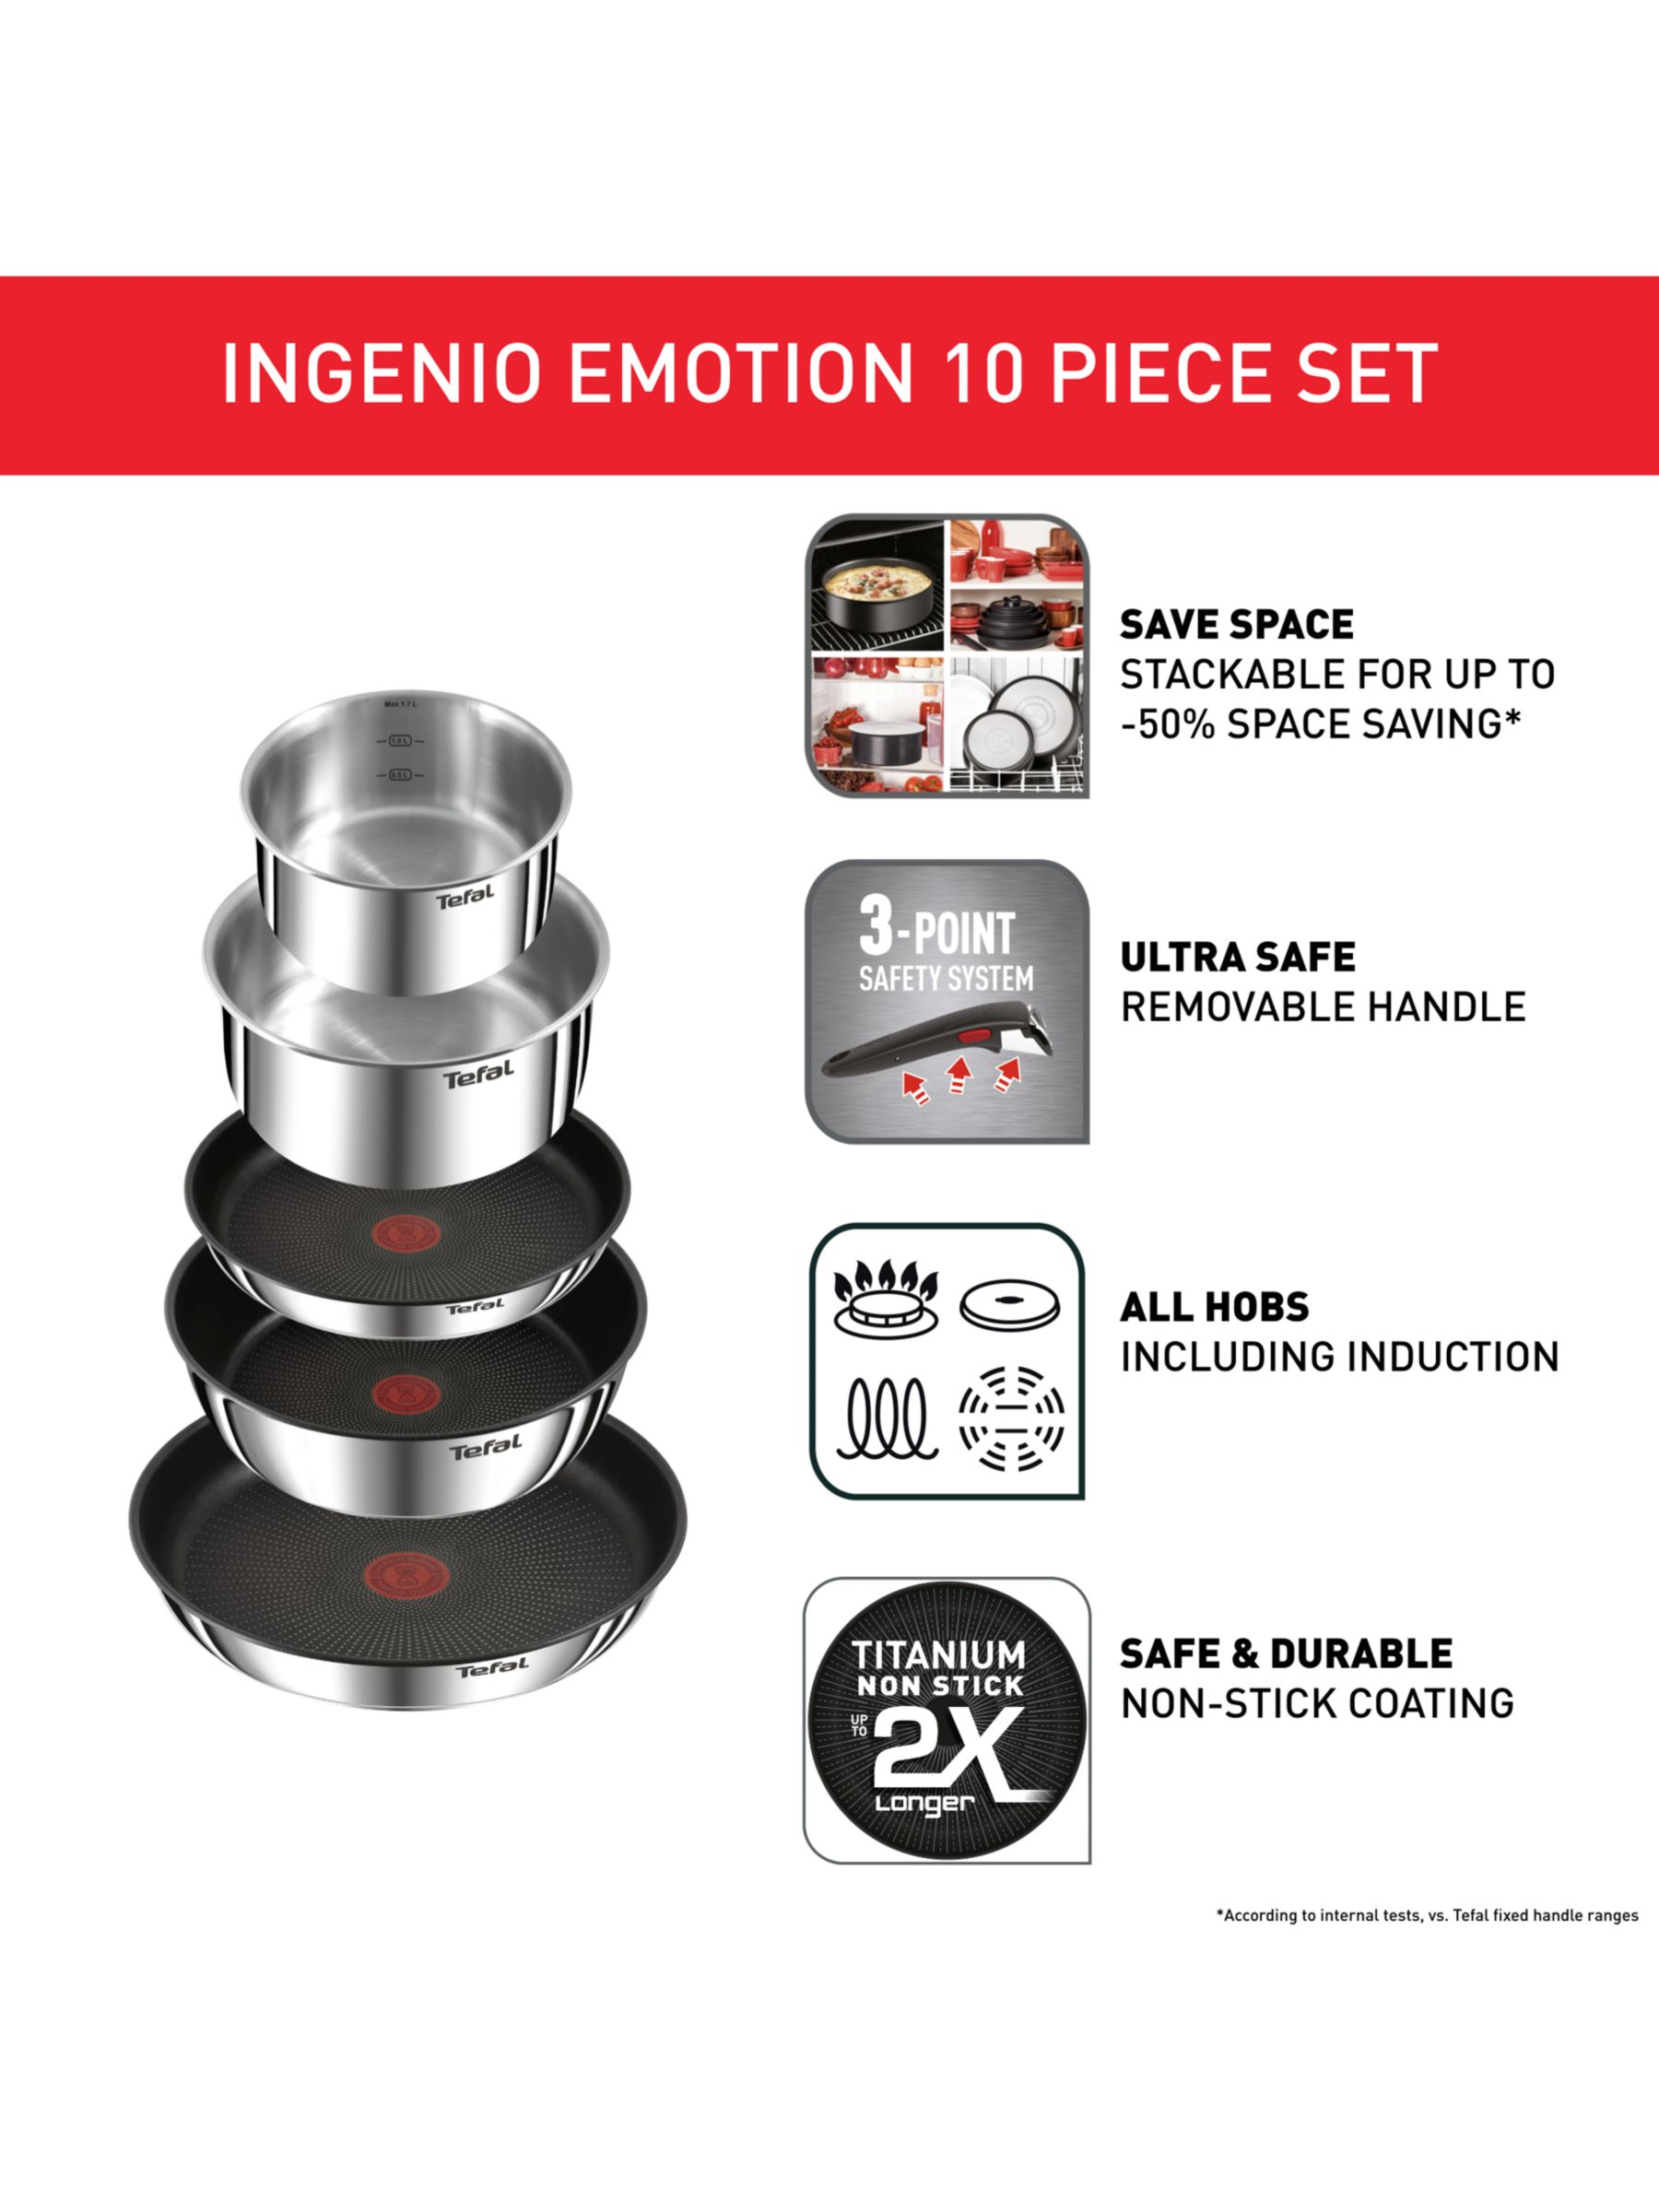 Tefal Ingenio Emotion Stainless Steel Pans, Lids & Utensils Set